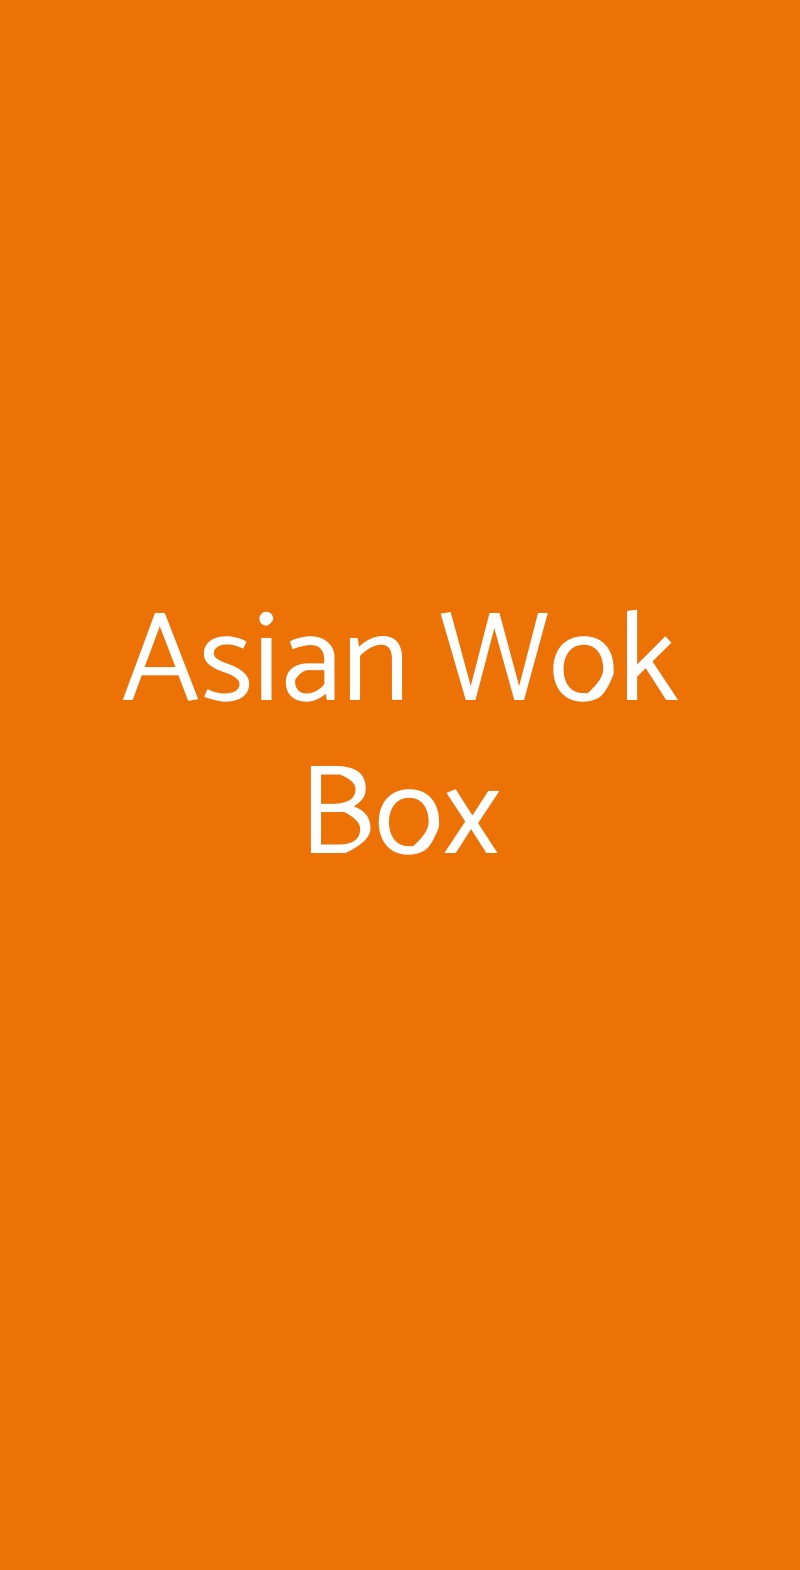 Asian Wok Box Milano menù 1 pagina